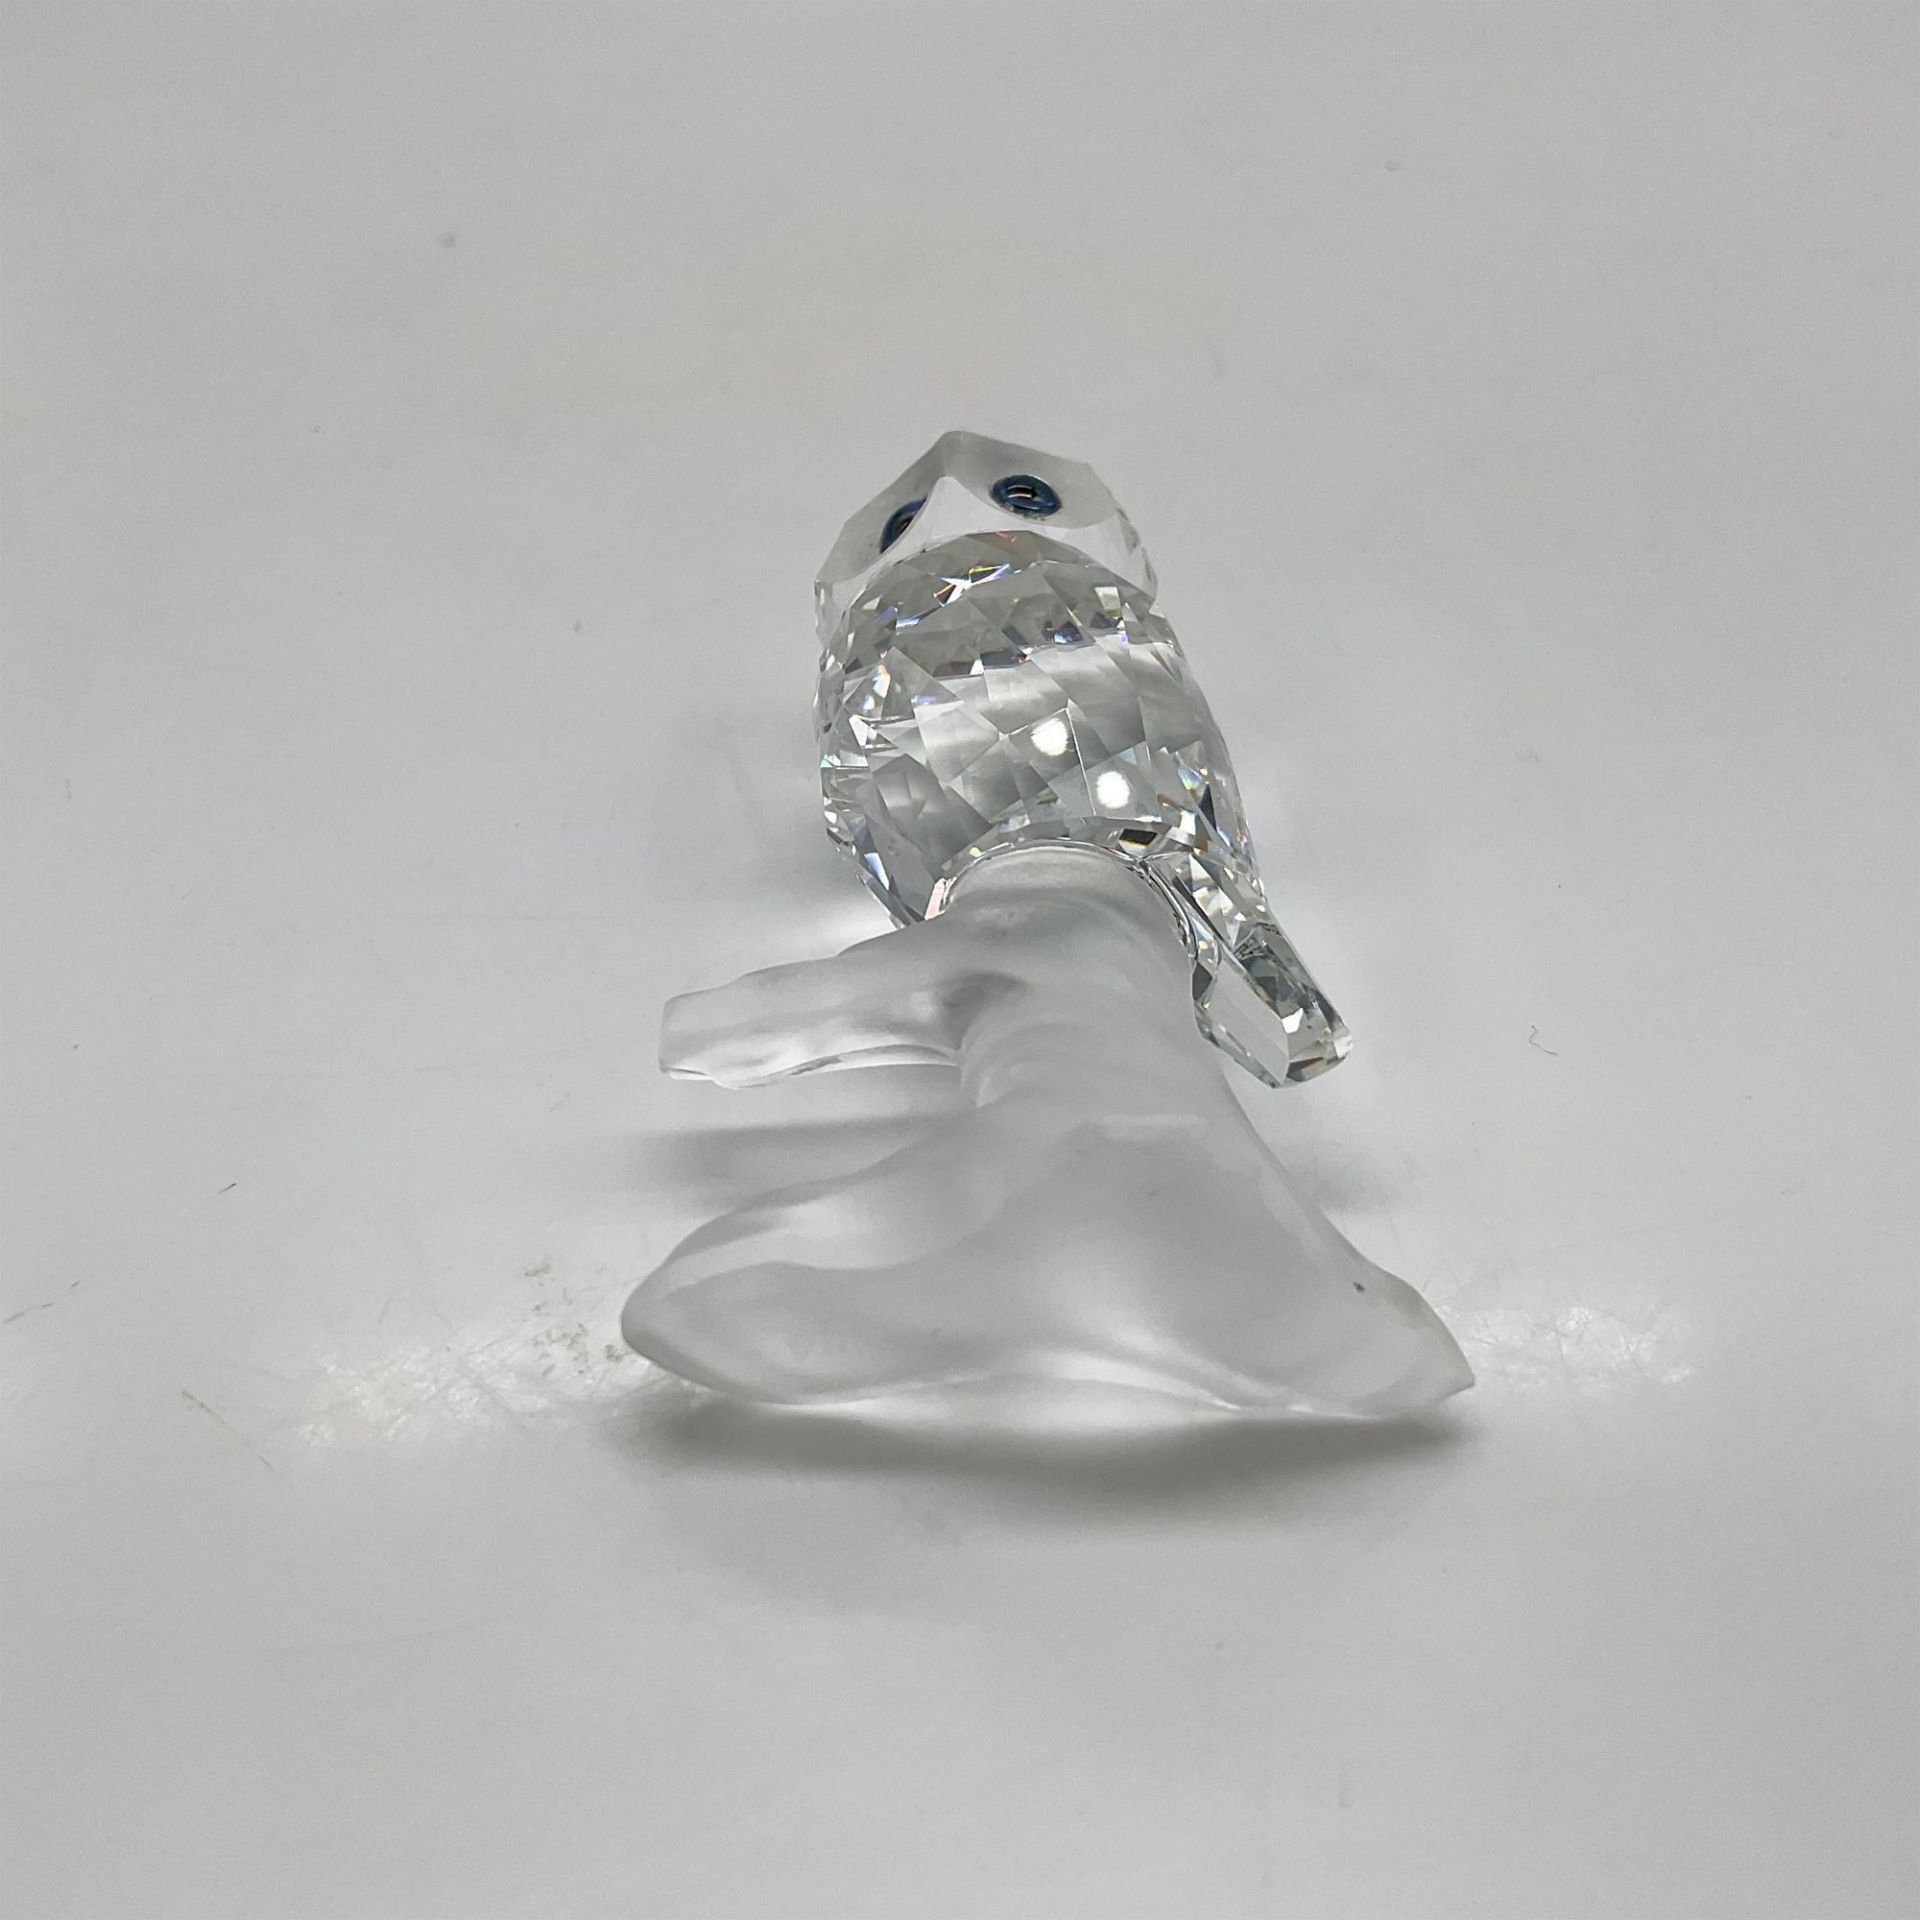 Swarovski Silver Crystal Figurine, Owl on Branch - Image 3 of 4